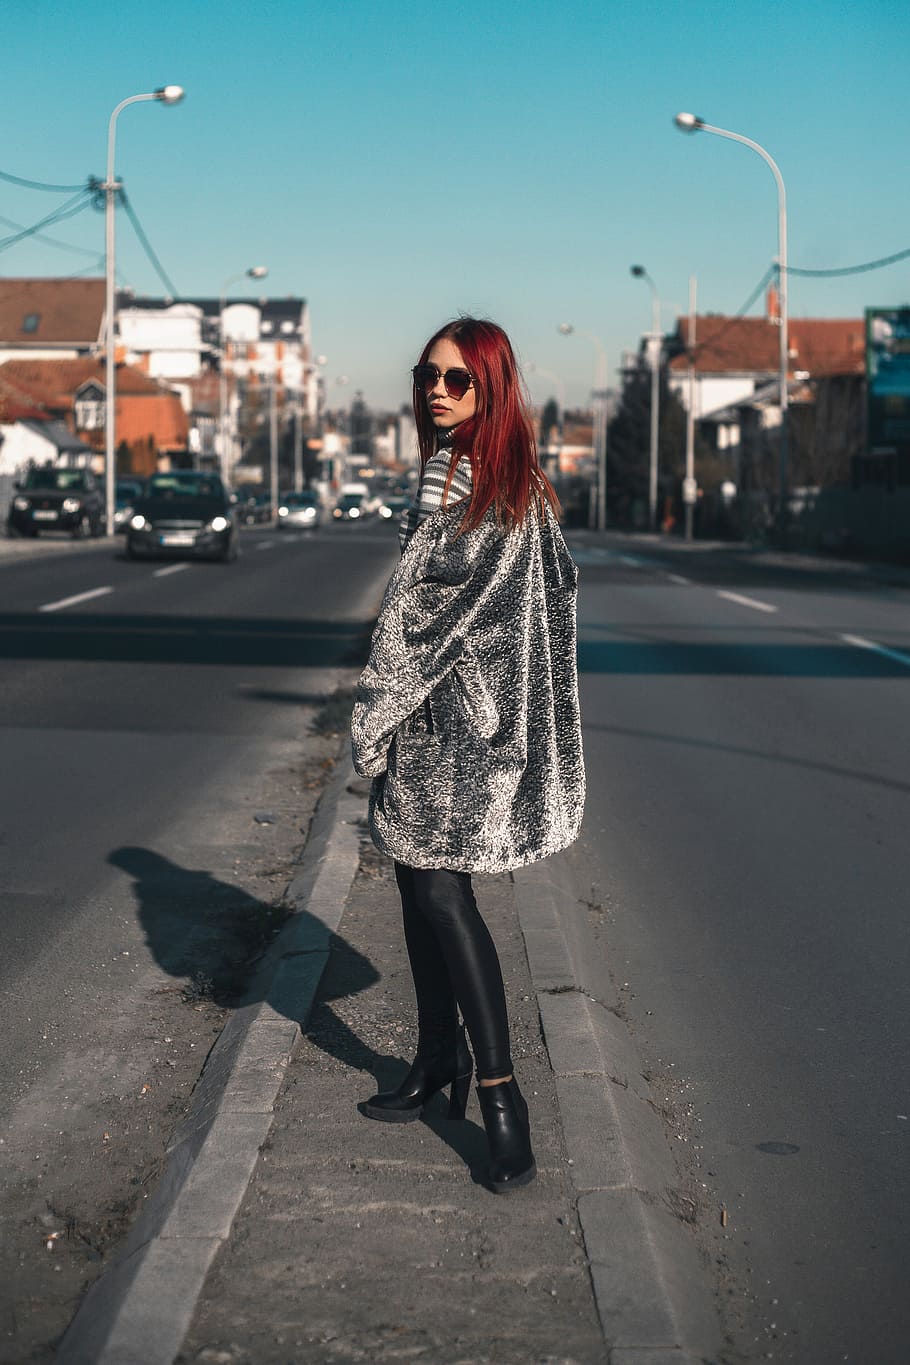 Fashion redhead girl walking down the street, woman walking on stree